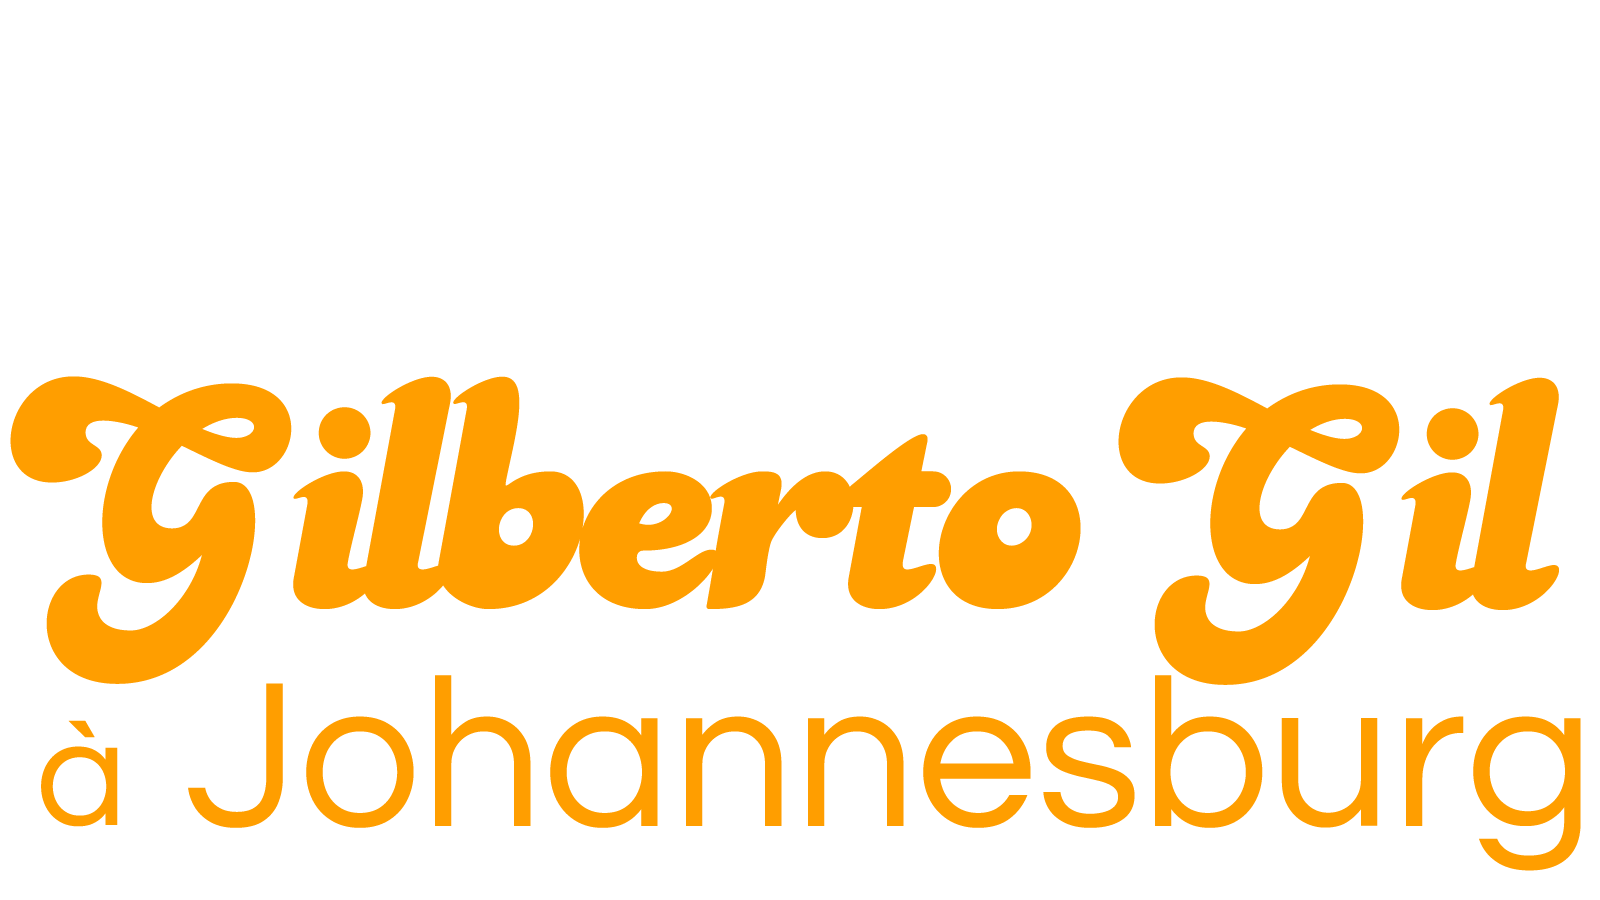 Concert de Gilberto Gil à Johannesburg